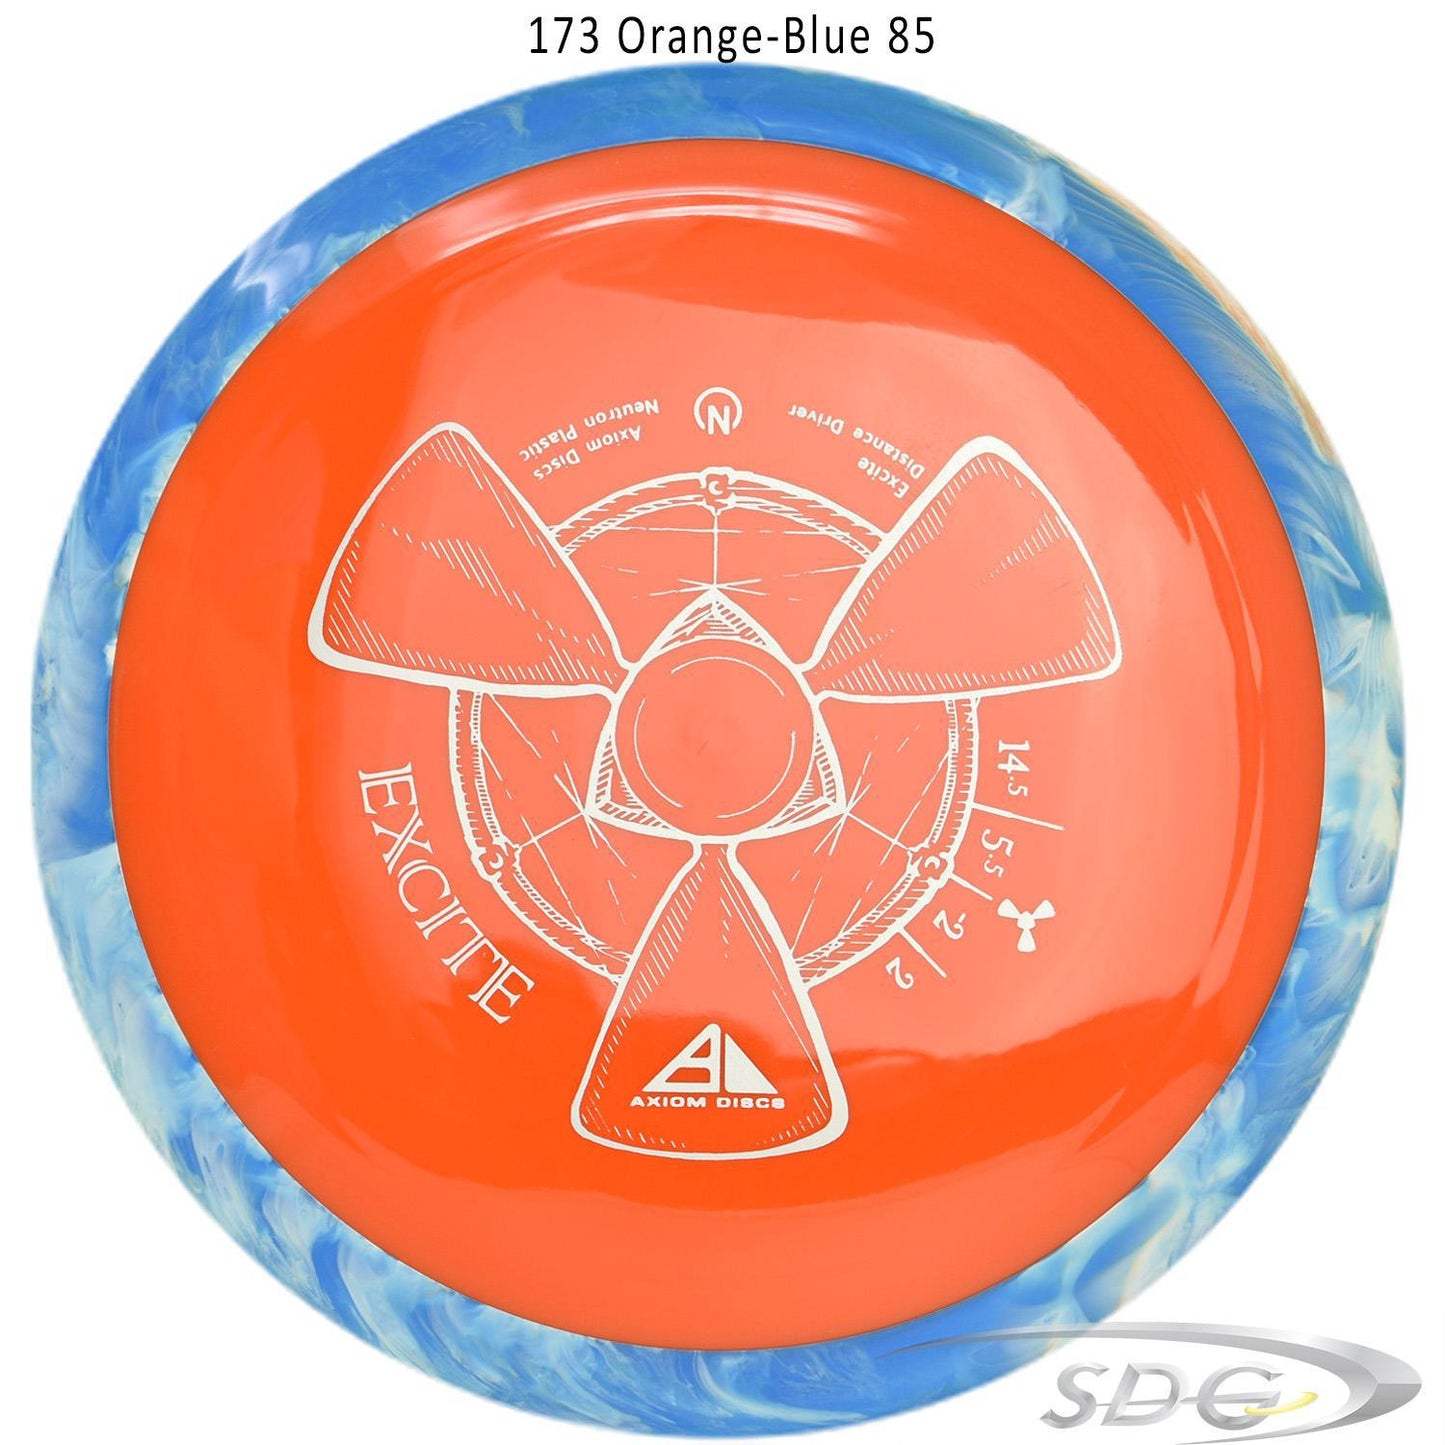 axiom-neutron-excite-disc-golf-distance-driver 173 Orange-Blue 85 